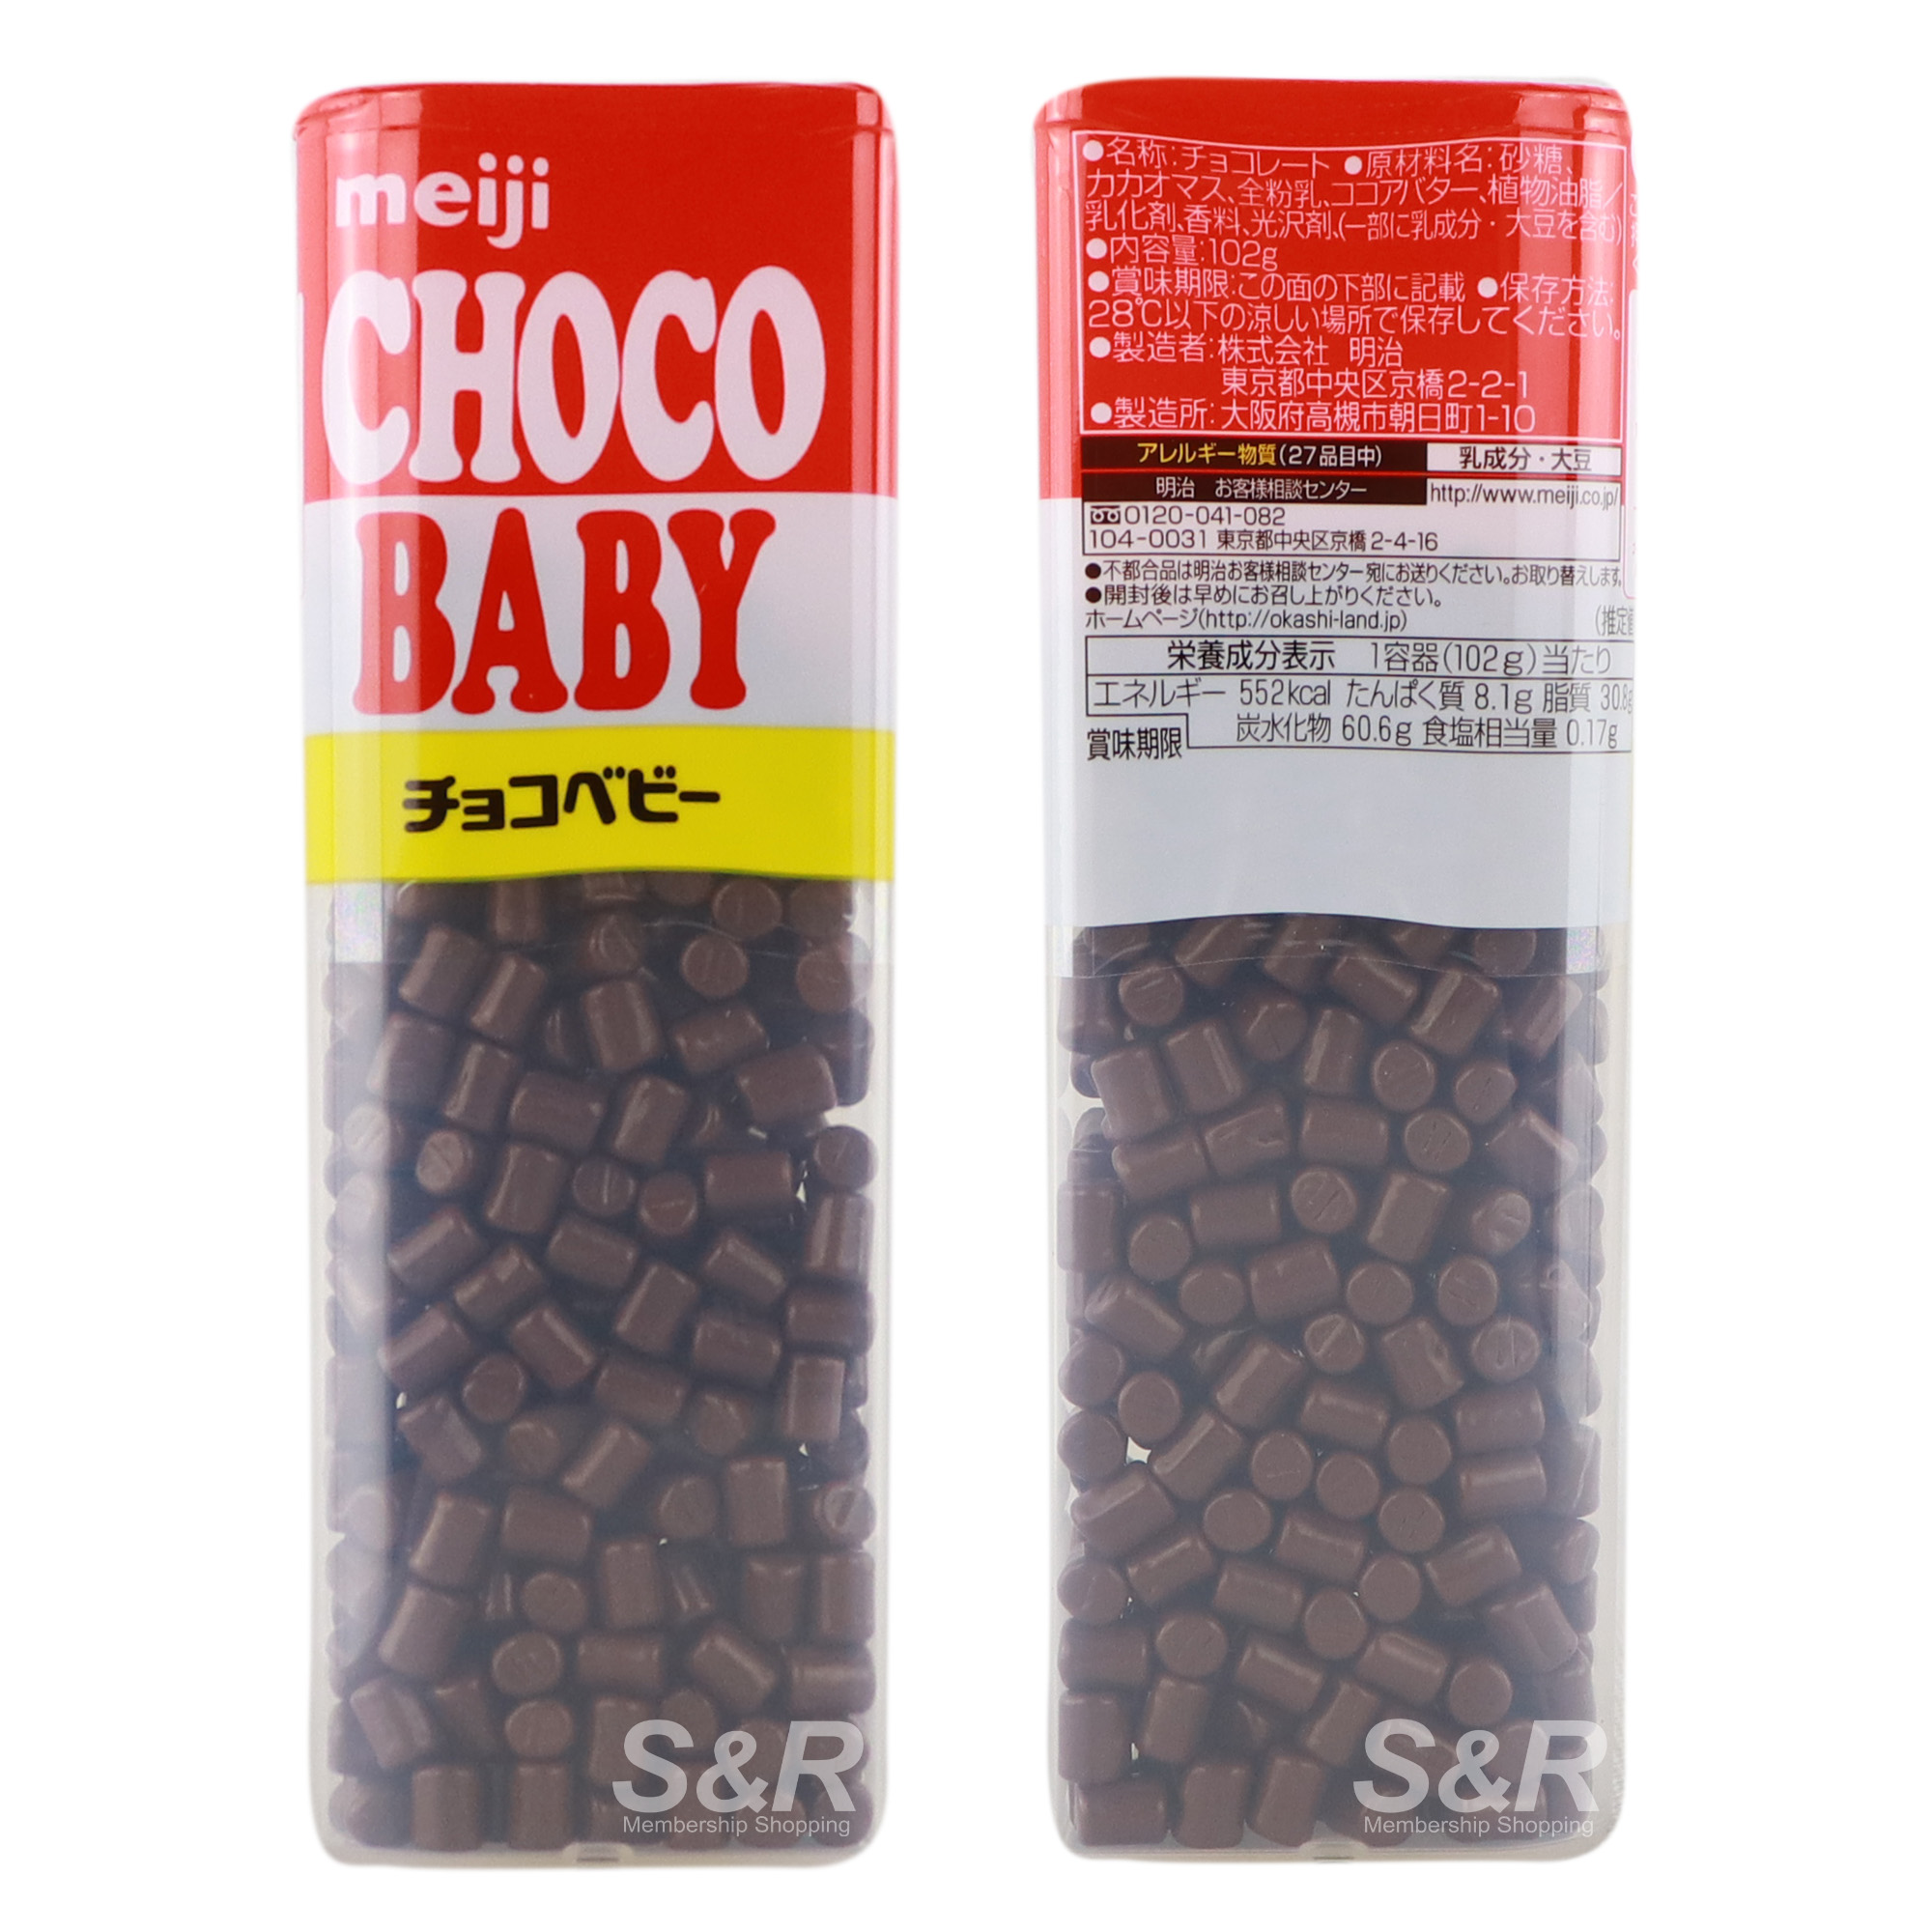 chocolate pellets